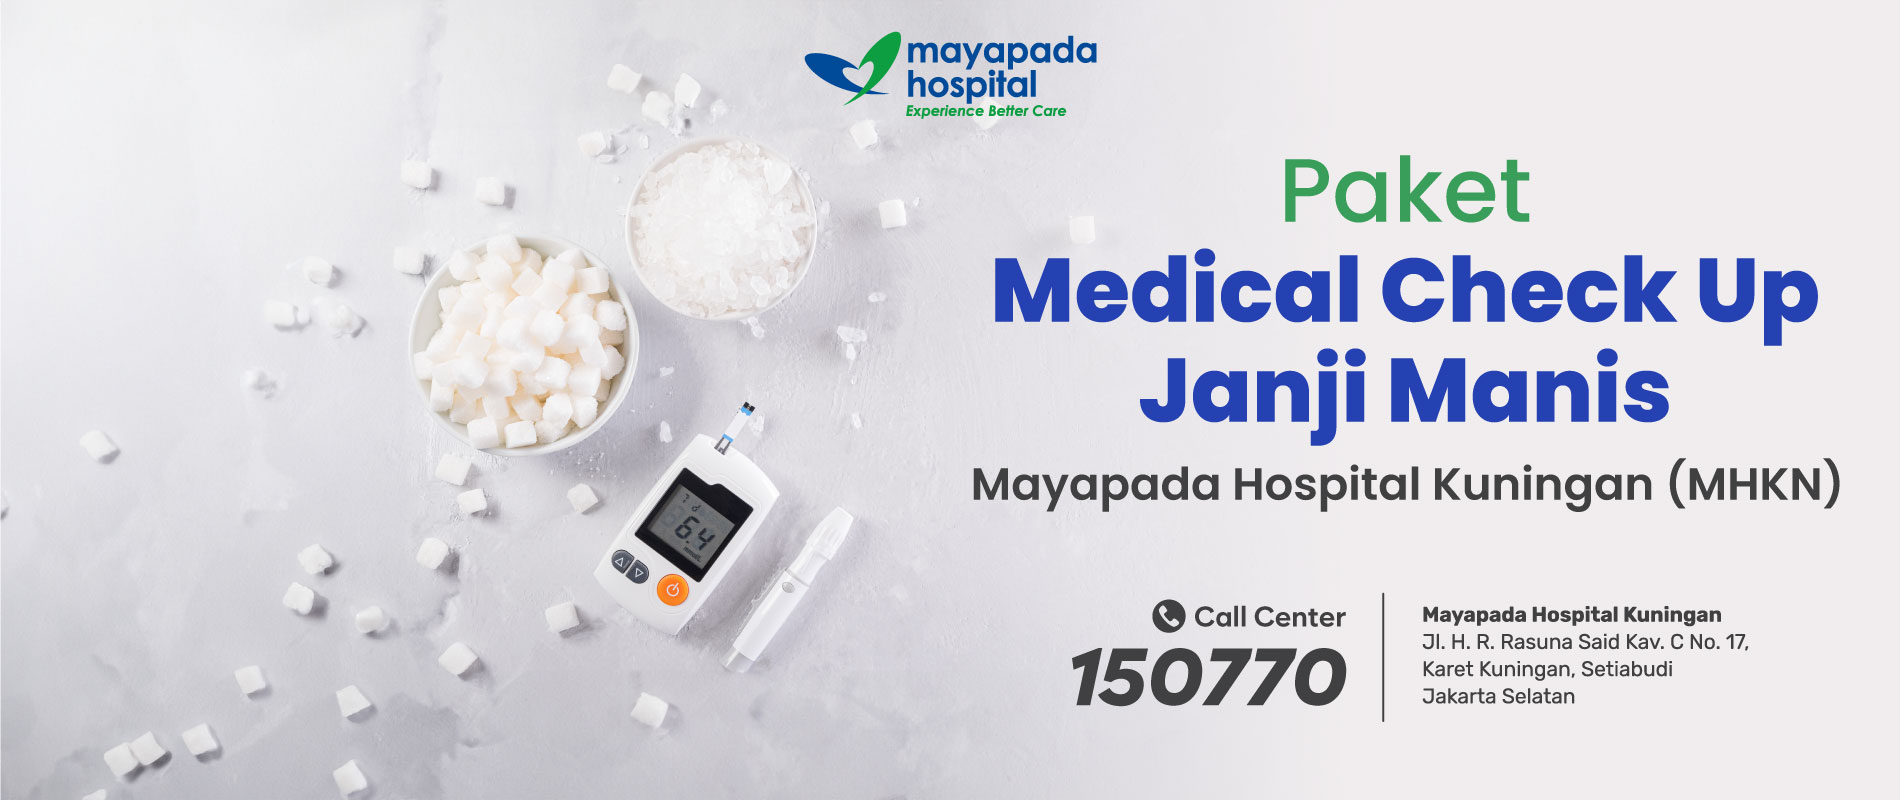 Paket Medical Check Up Janji Manis di Mayapada Hospital Kuningan IMG